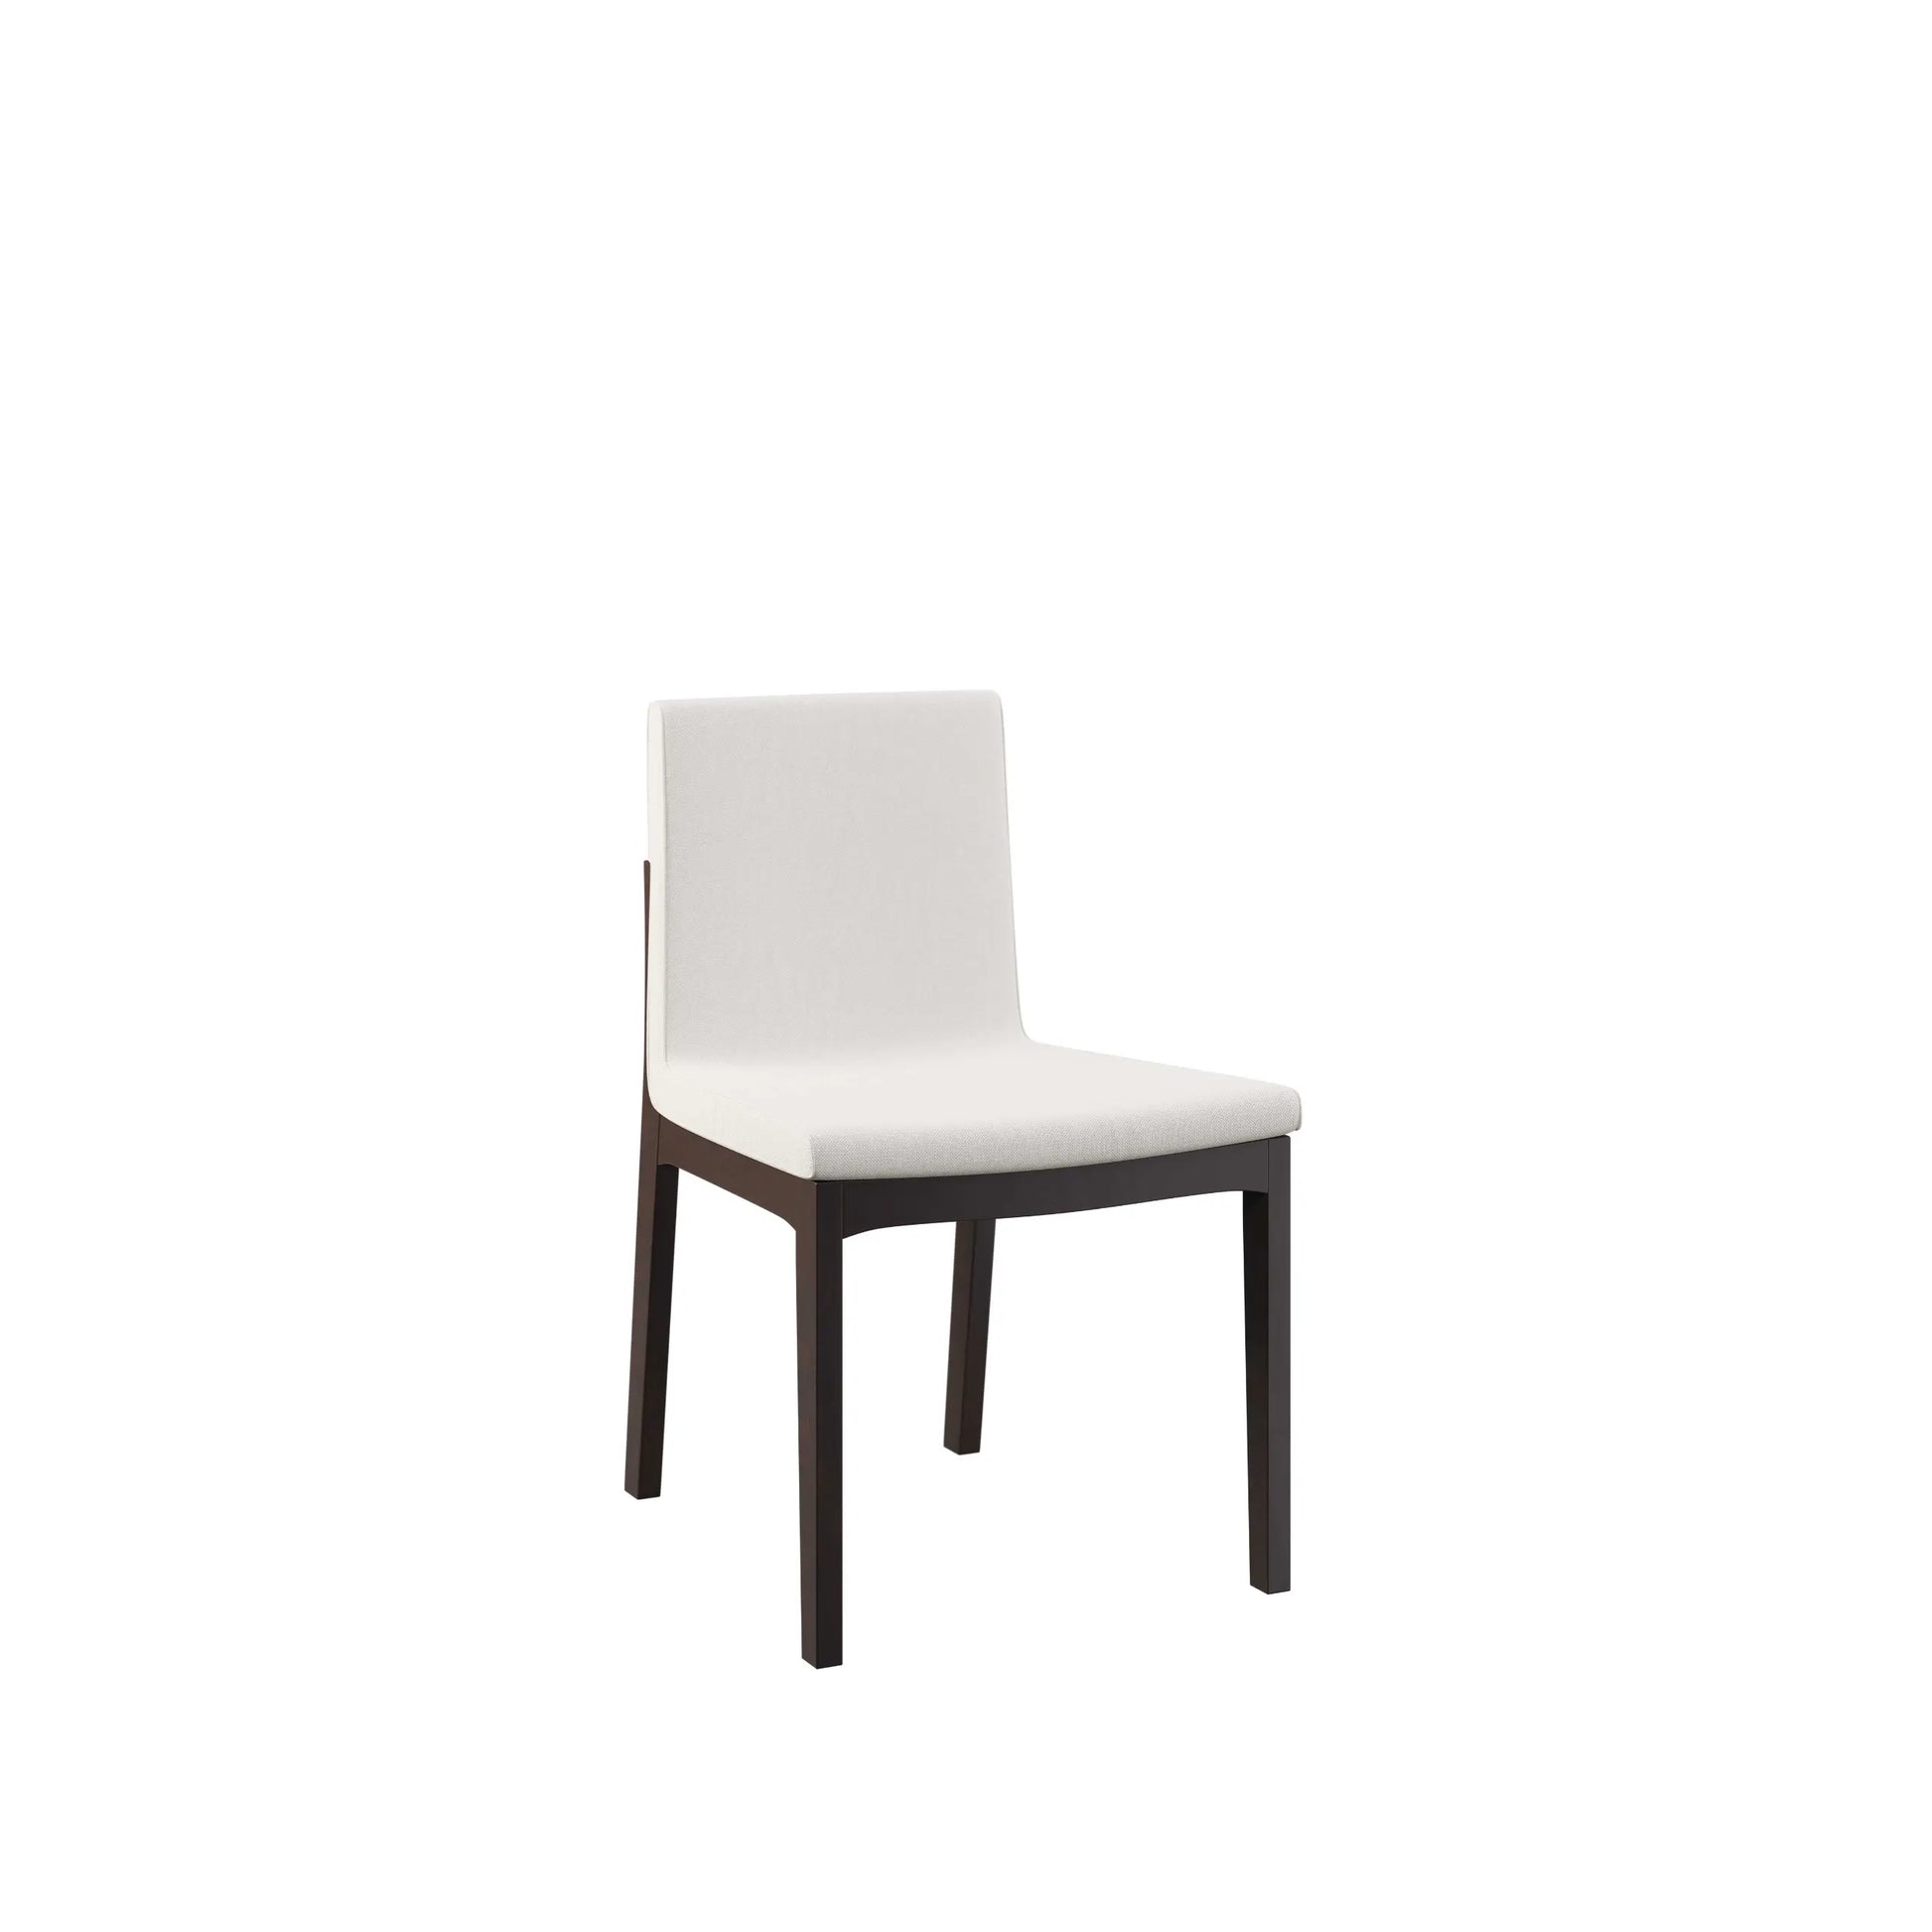 The Capri - Upholstered Modern Dining Chair Moderncre8ve